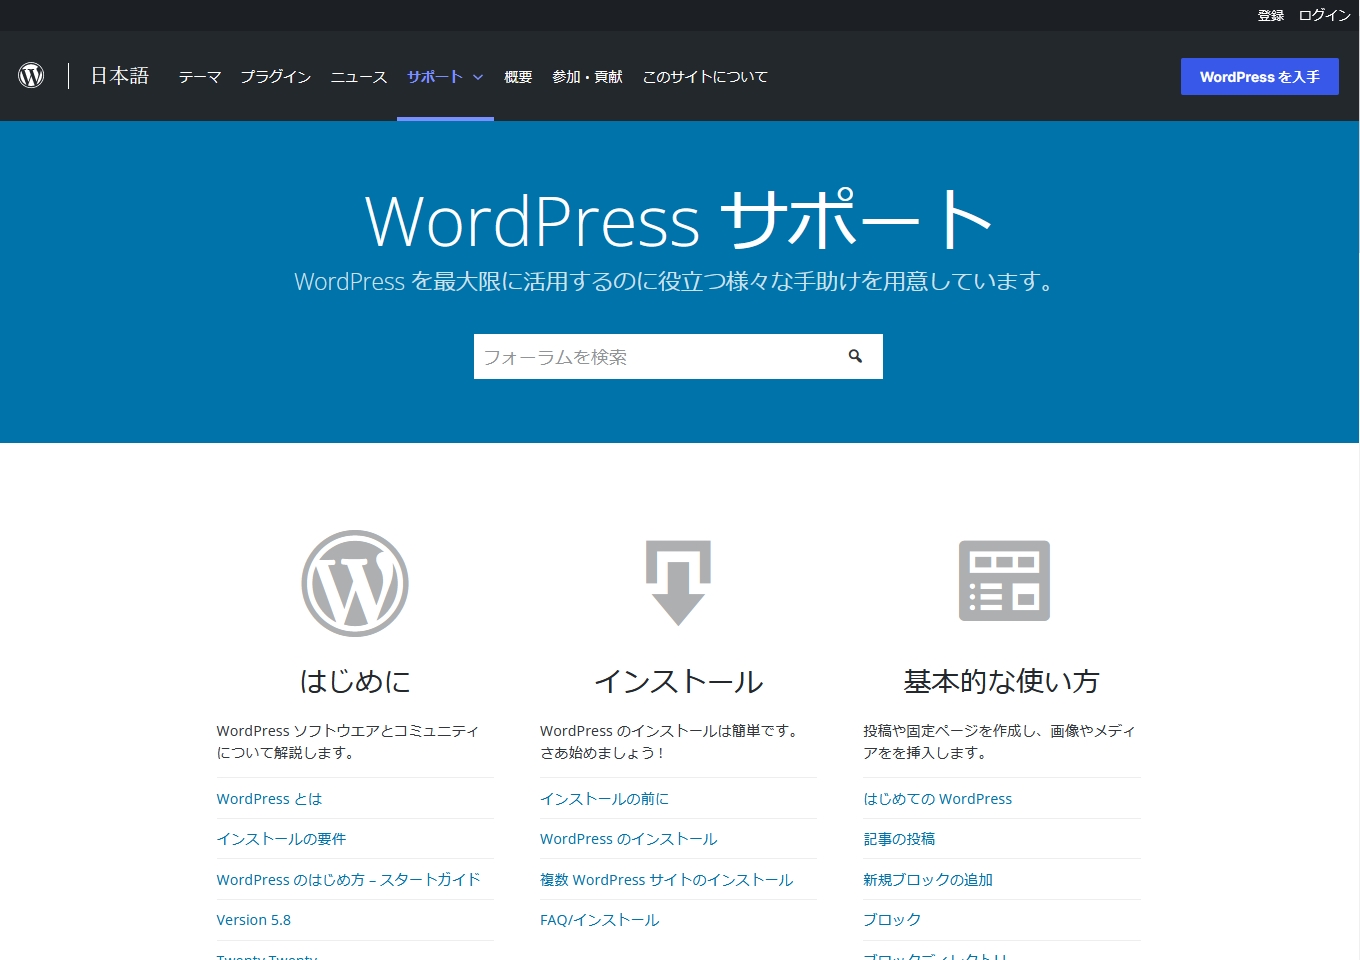 WordPress サポート